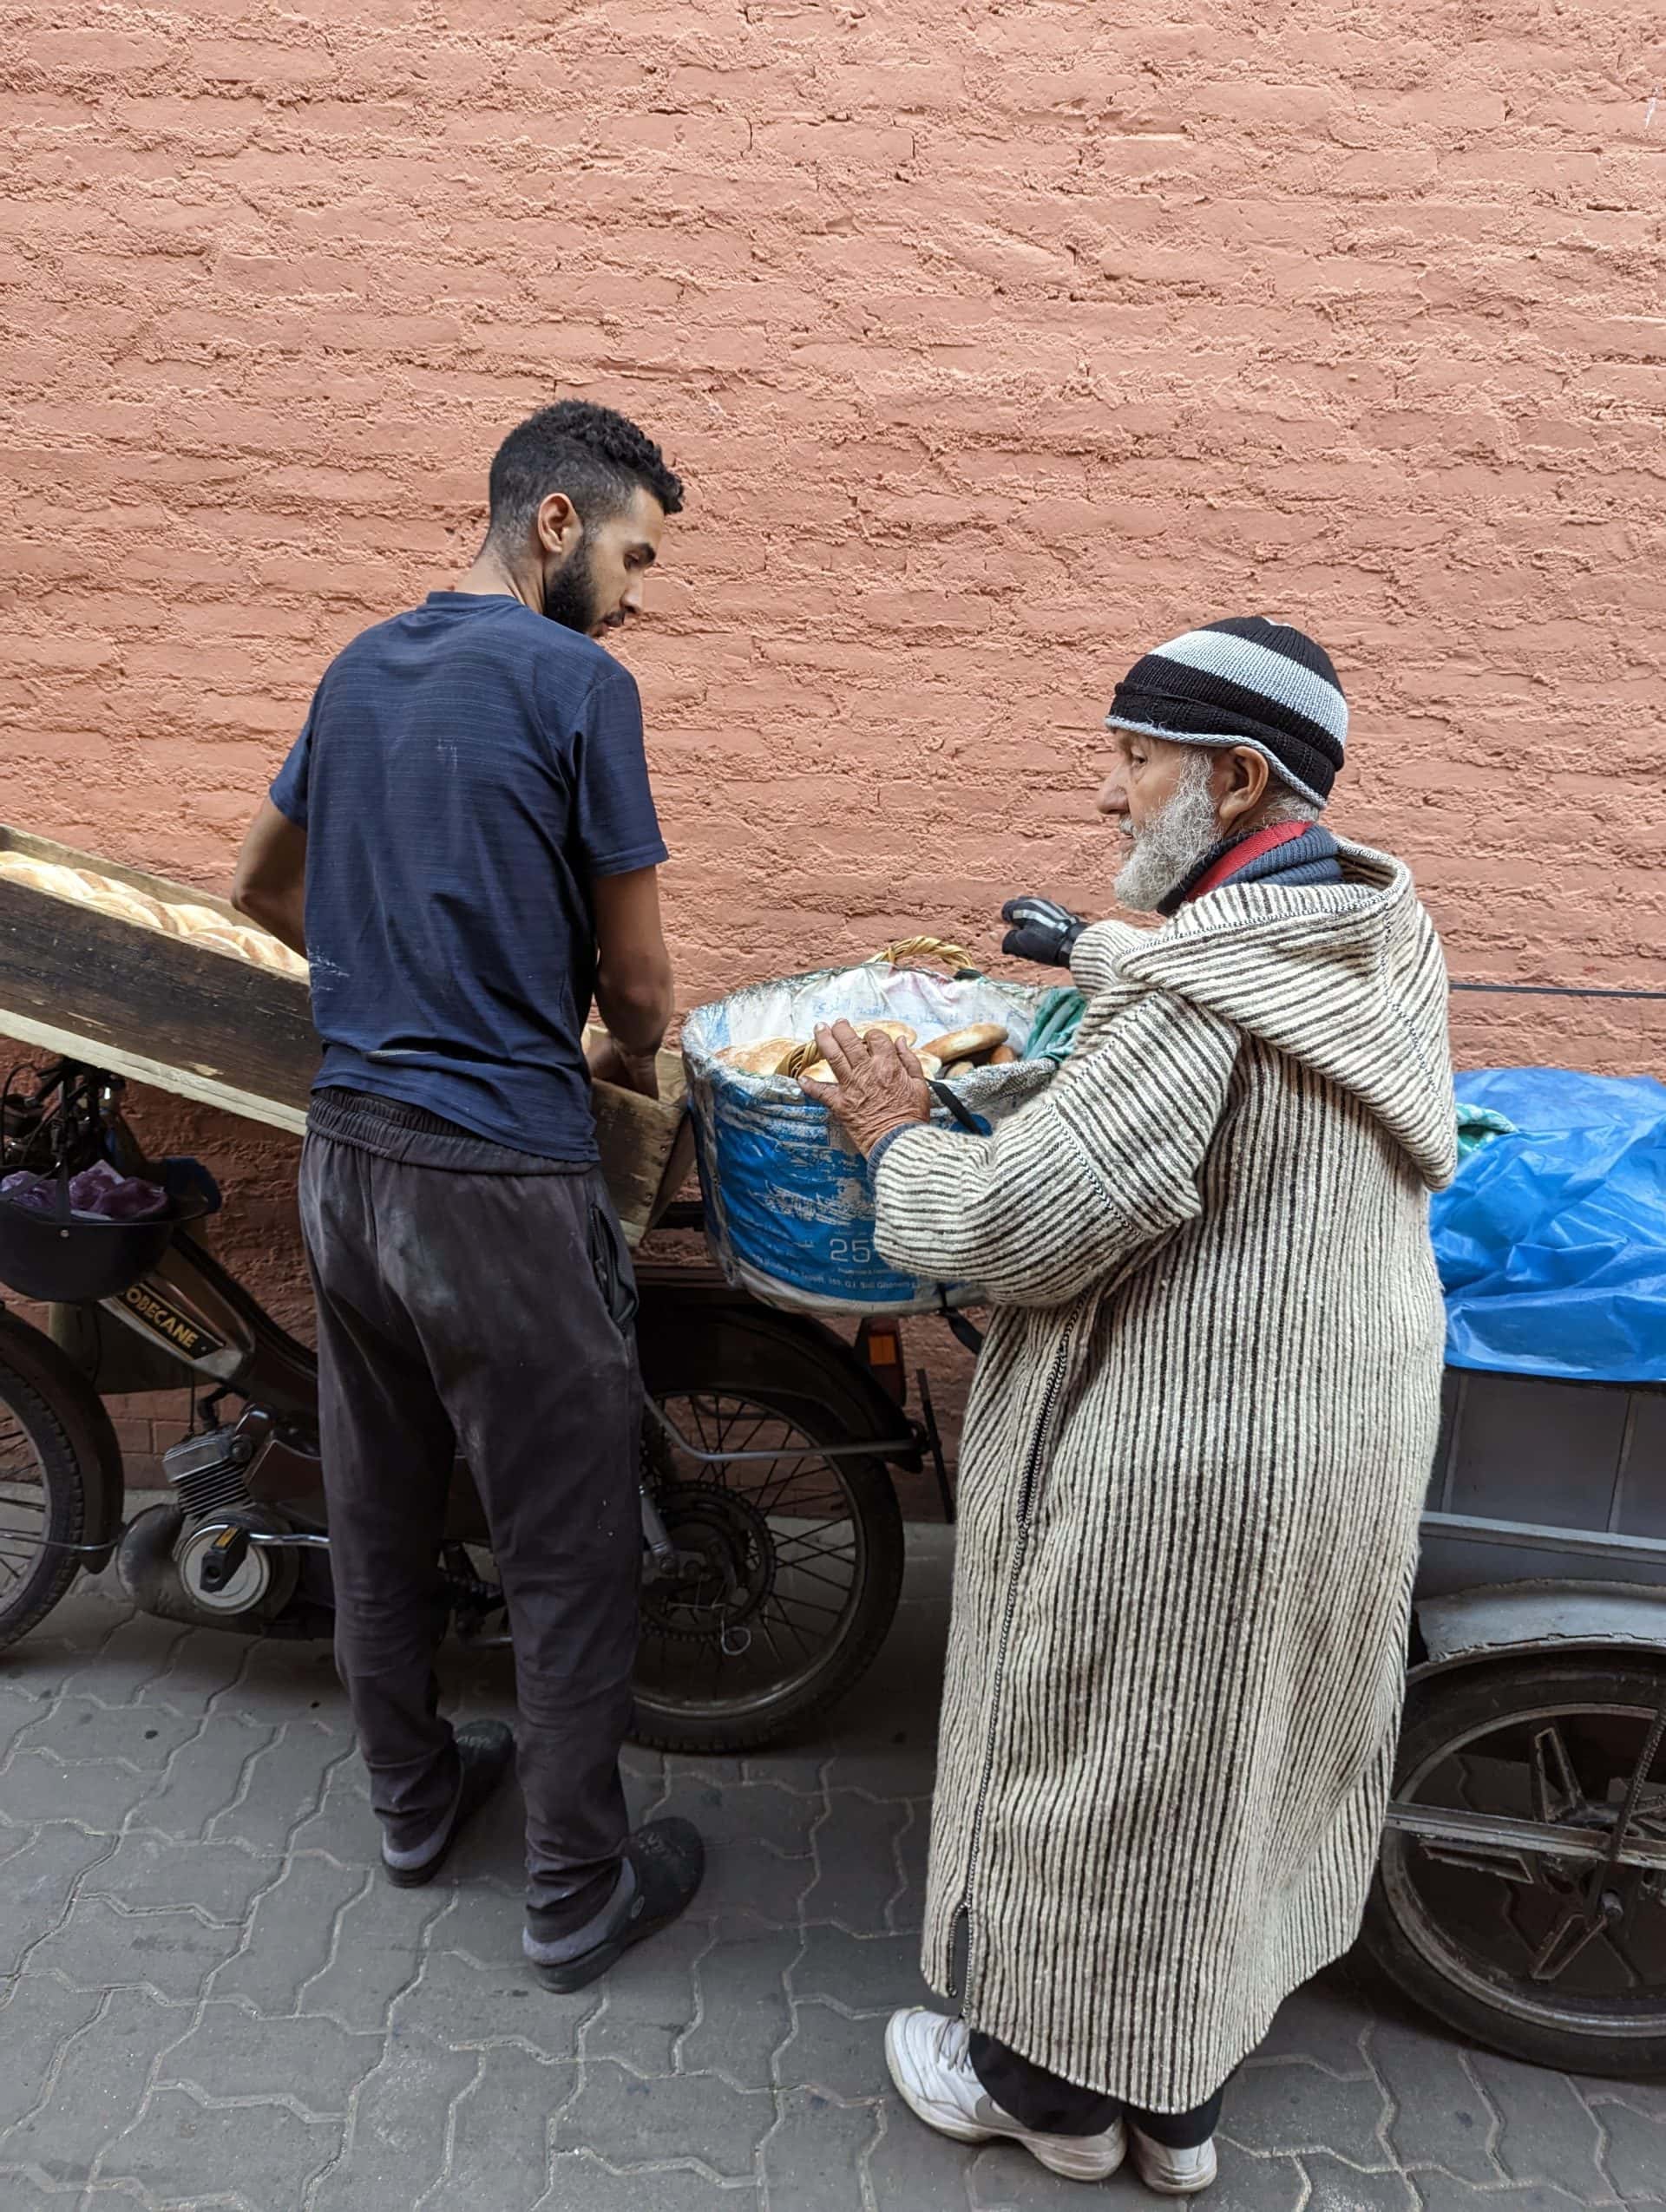 Delivering bread in Morocco.